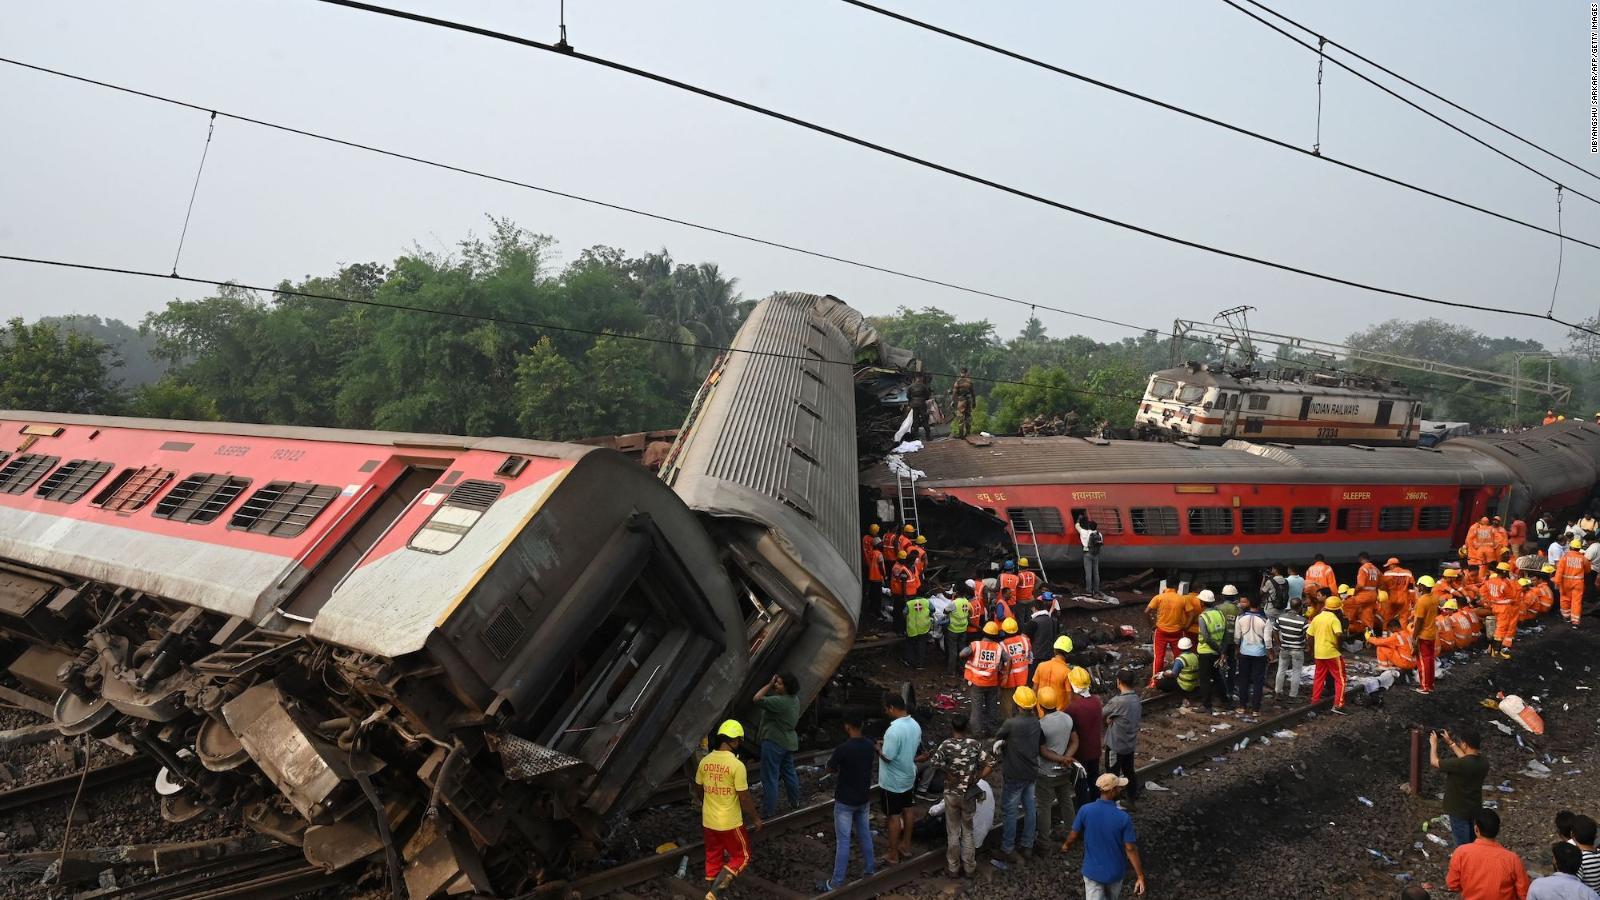 descripcion de un accidente ferroviario - Qué pasa si choca un tren